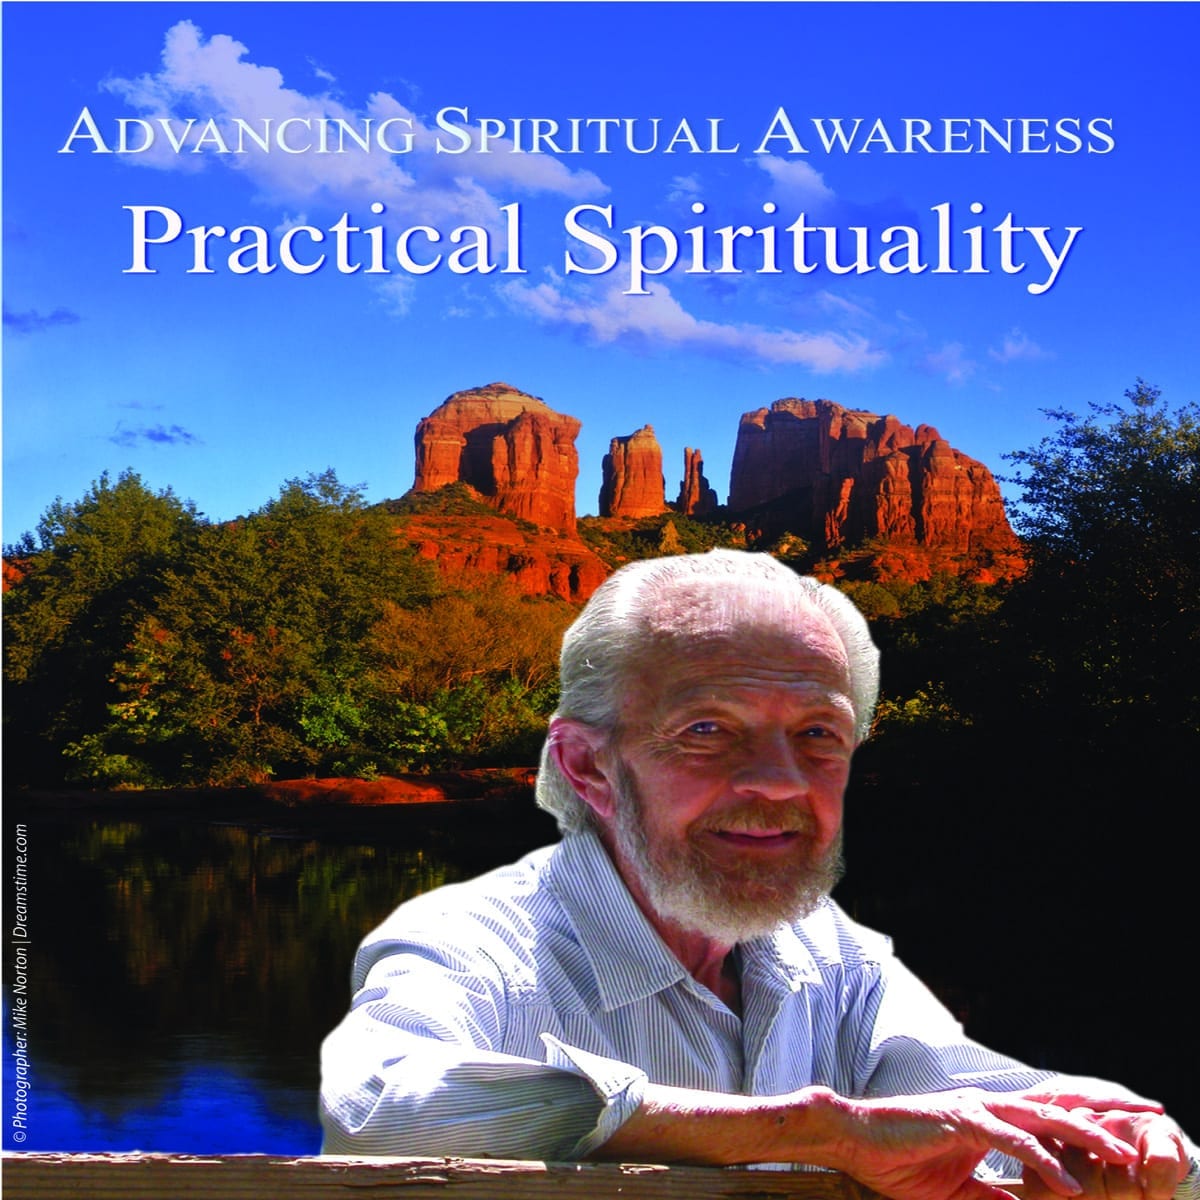 Practical Spirituality (Oct 2008)